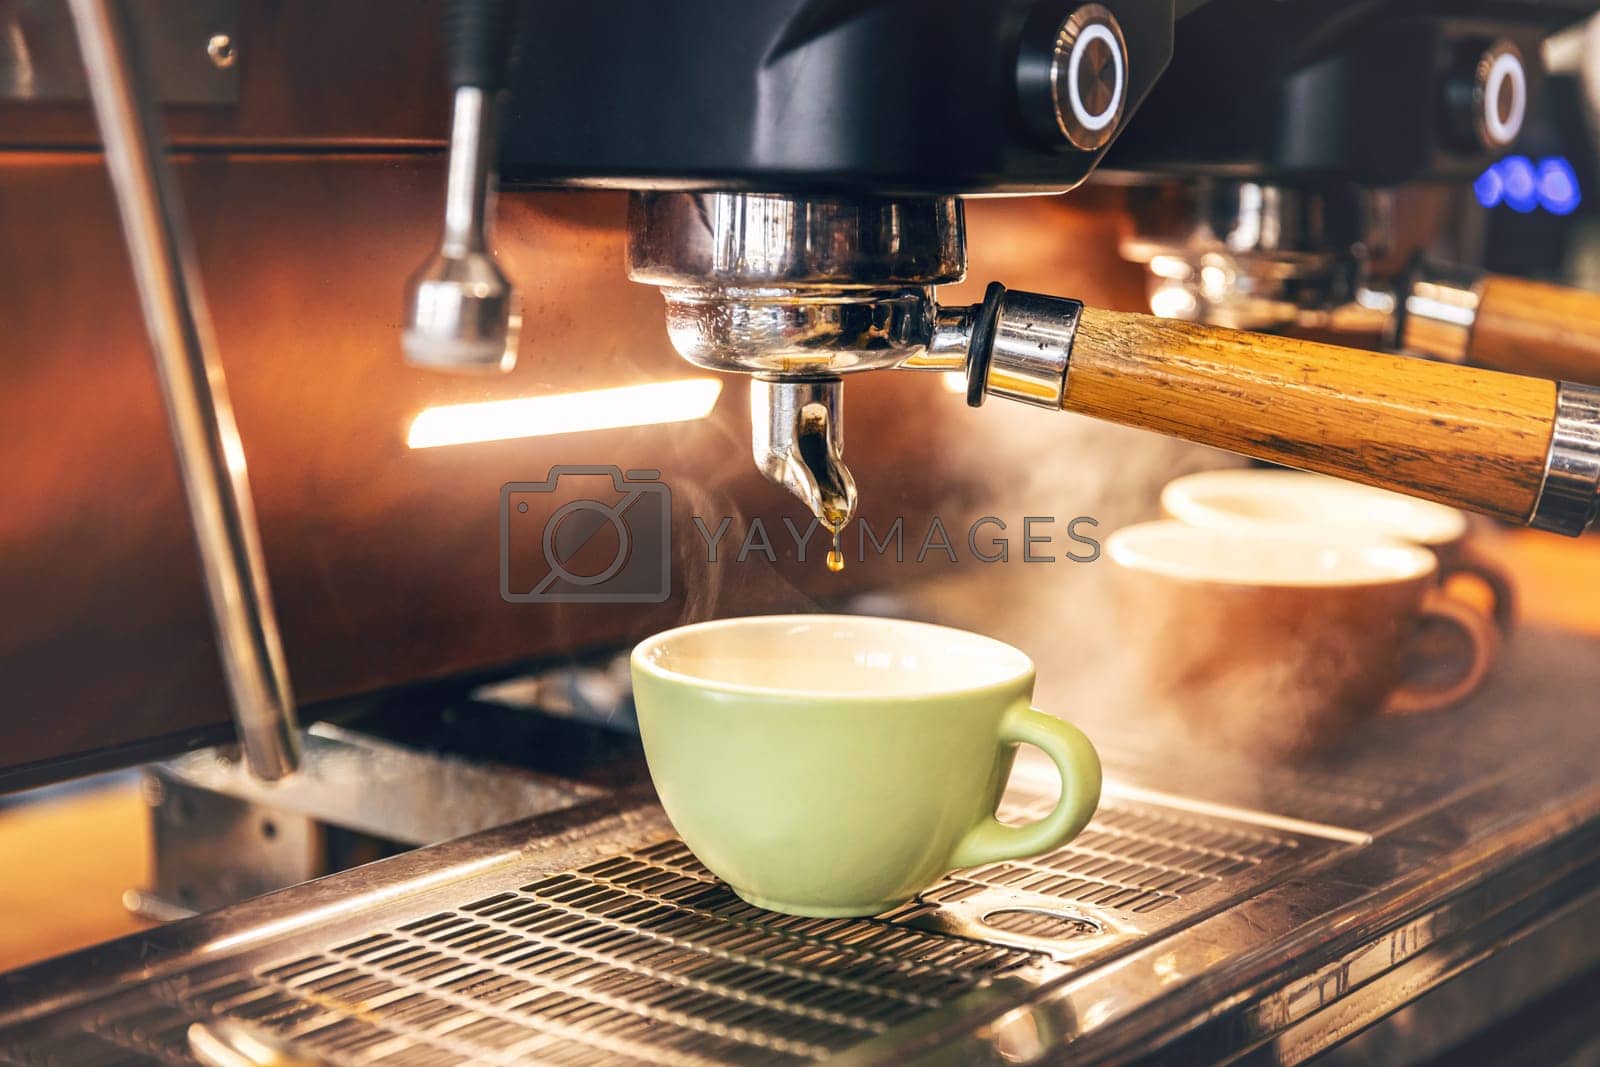 Royalty free image of Coffee machine preparing fresh coffee by grafvision